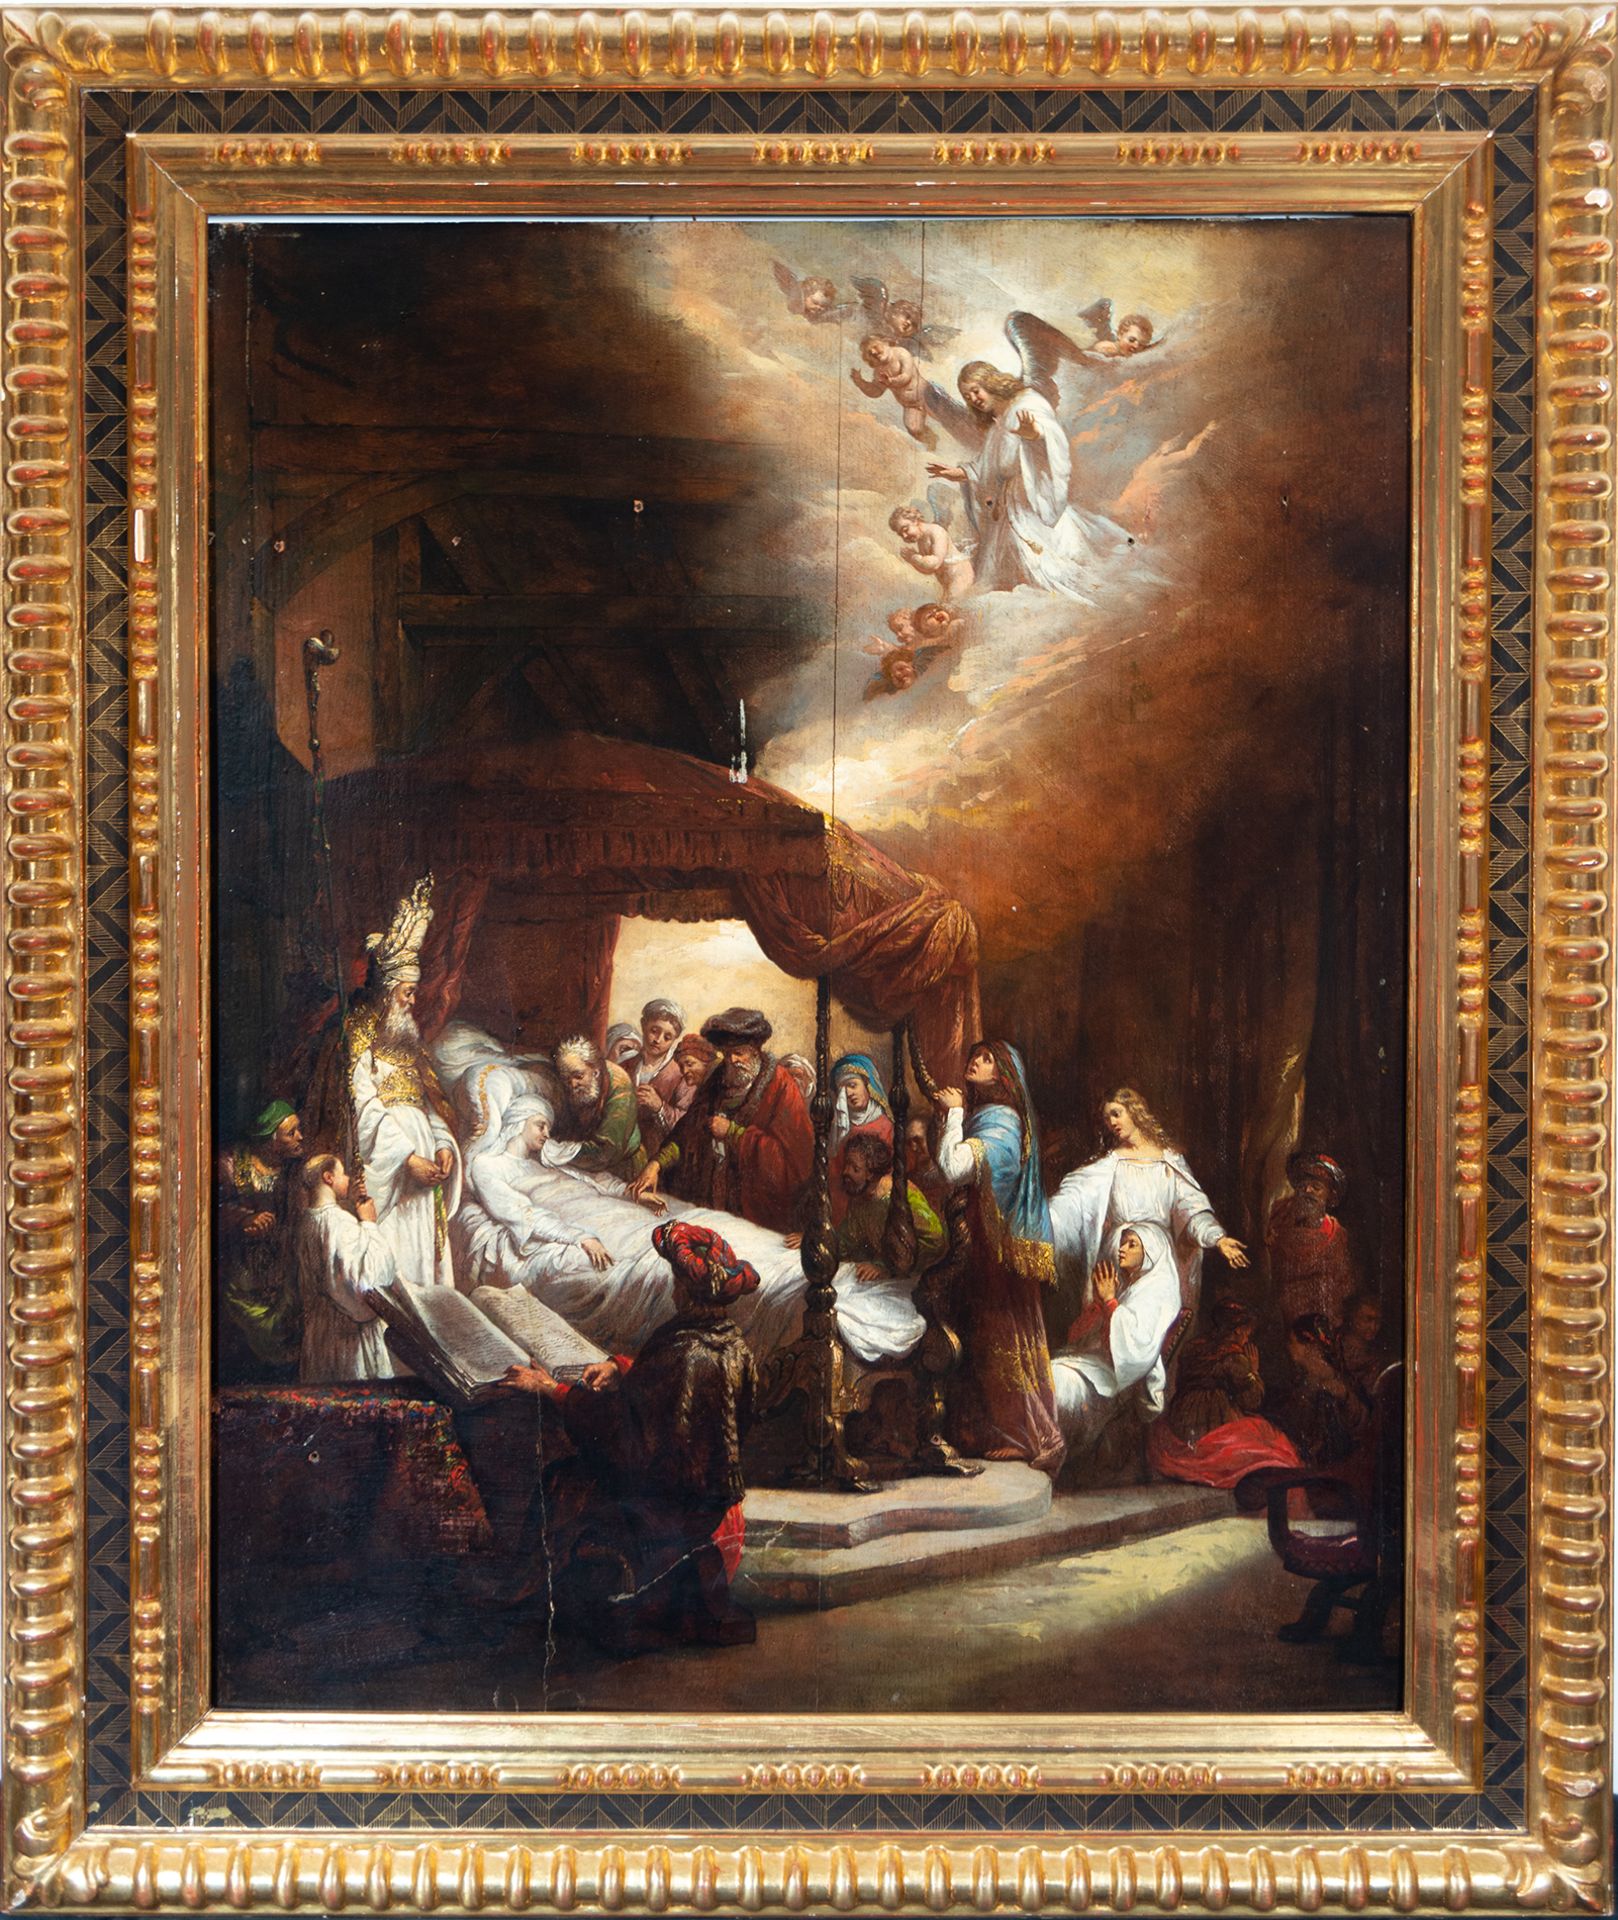 The Death of the Virgin, Dutch school, late 16th century, circle of Rembrandt Harmenszoon van Rijn